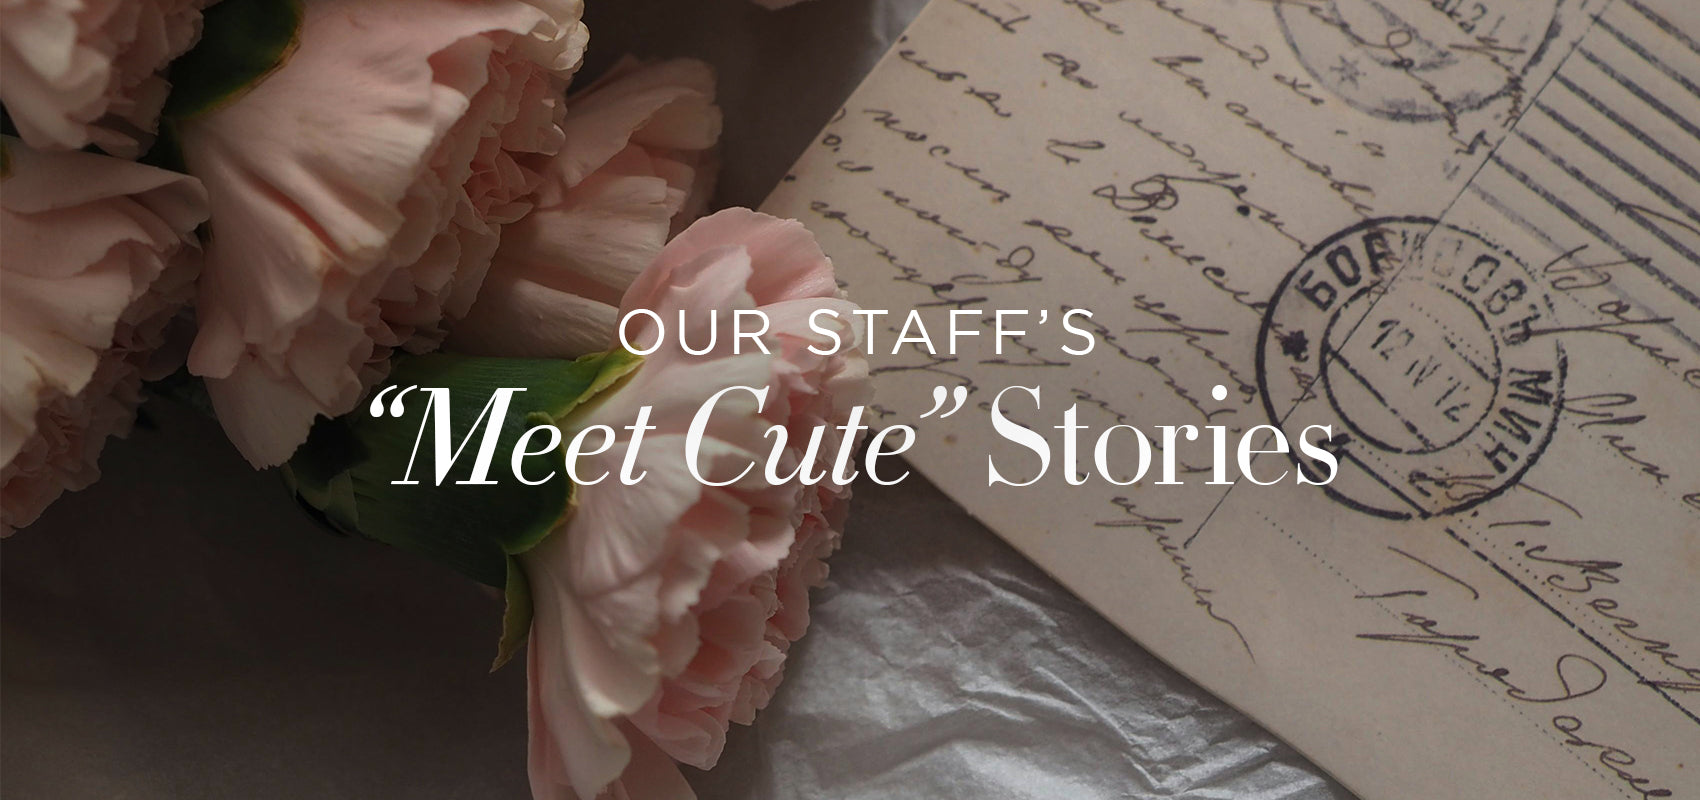 Our Staff’s “Meet Cute” Stories